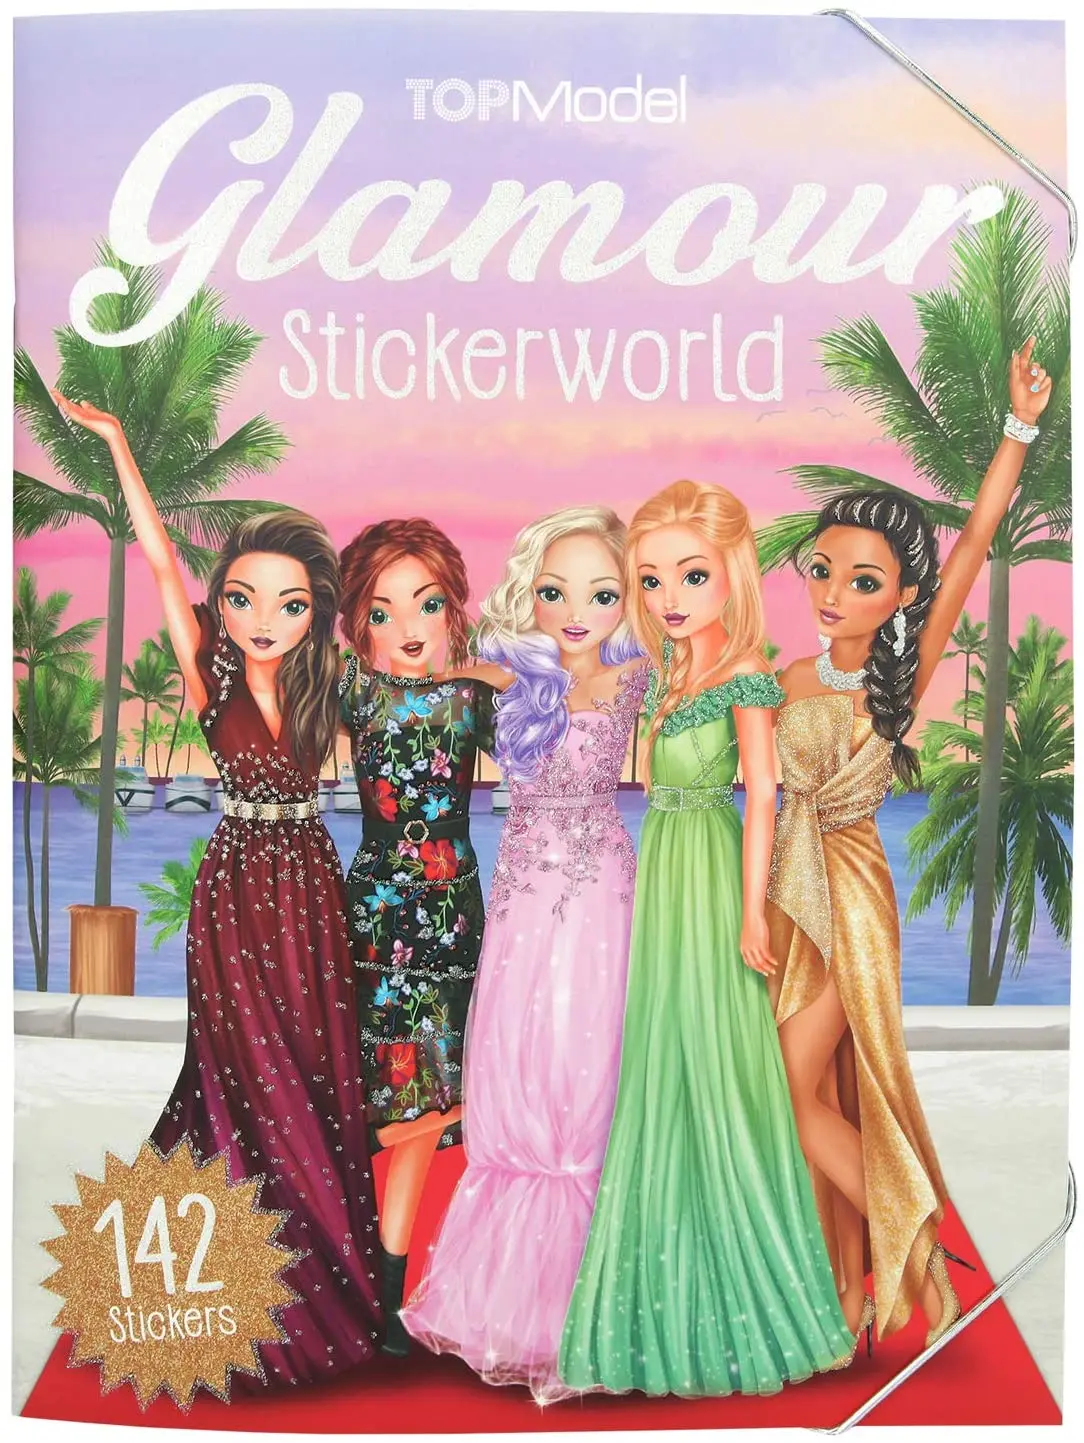 Top Model Glamour Stickerworld Sticker Album Scrapbook Book Special Coloring Book dress Paste Graffiti Coloring Painting|Coloring Book| AliExpress